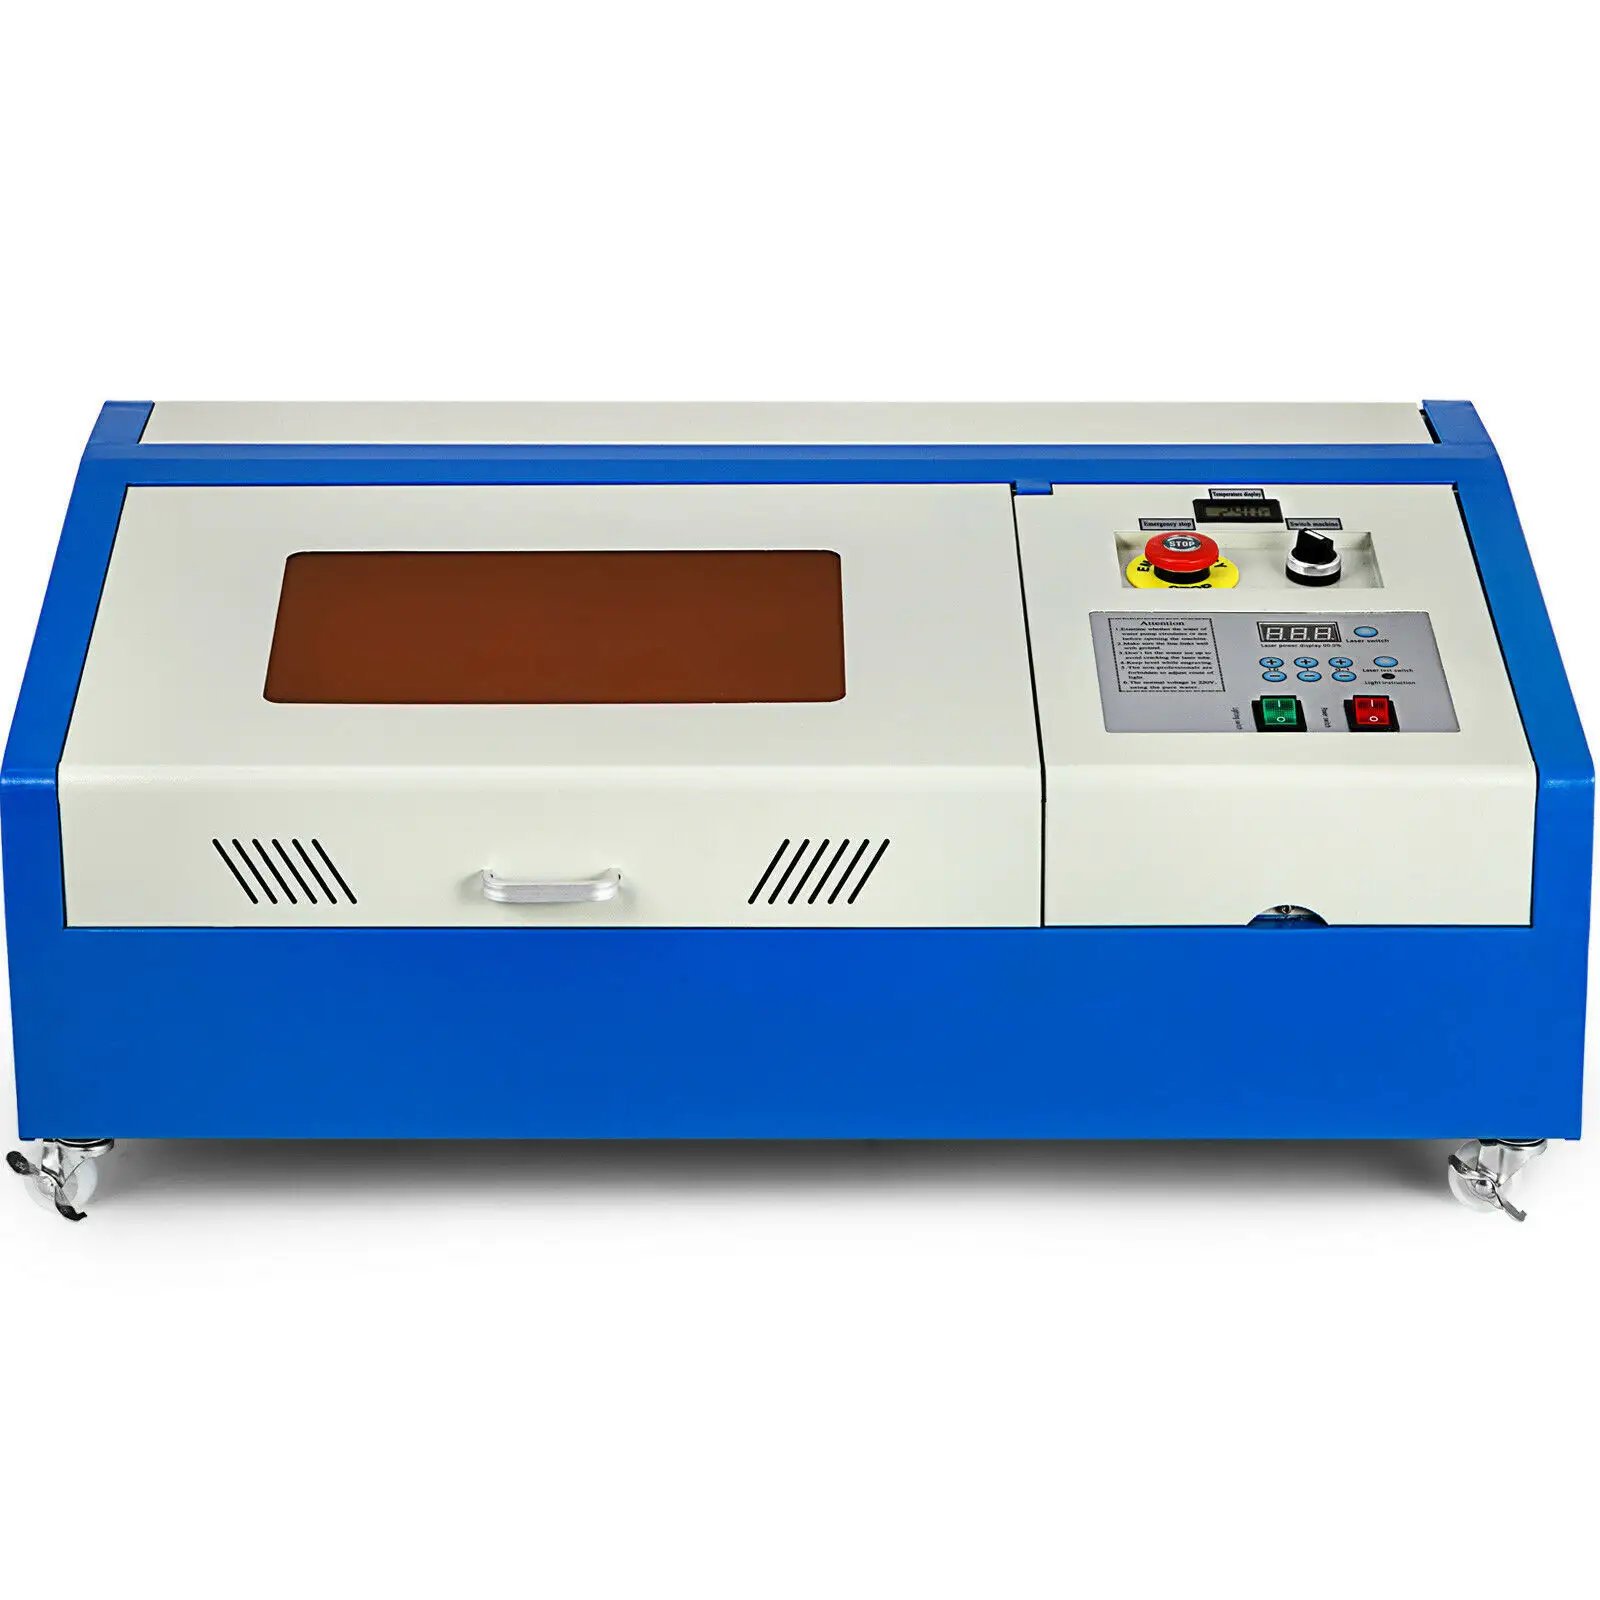 China distributor / dealer k40 laser crafts Machine Laser Engraver making rubber stamp laser engraving machine